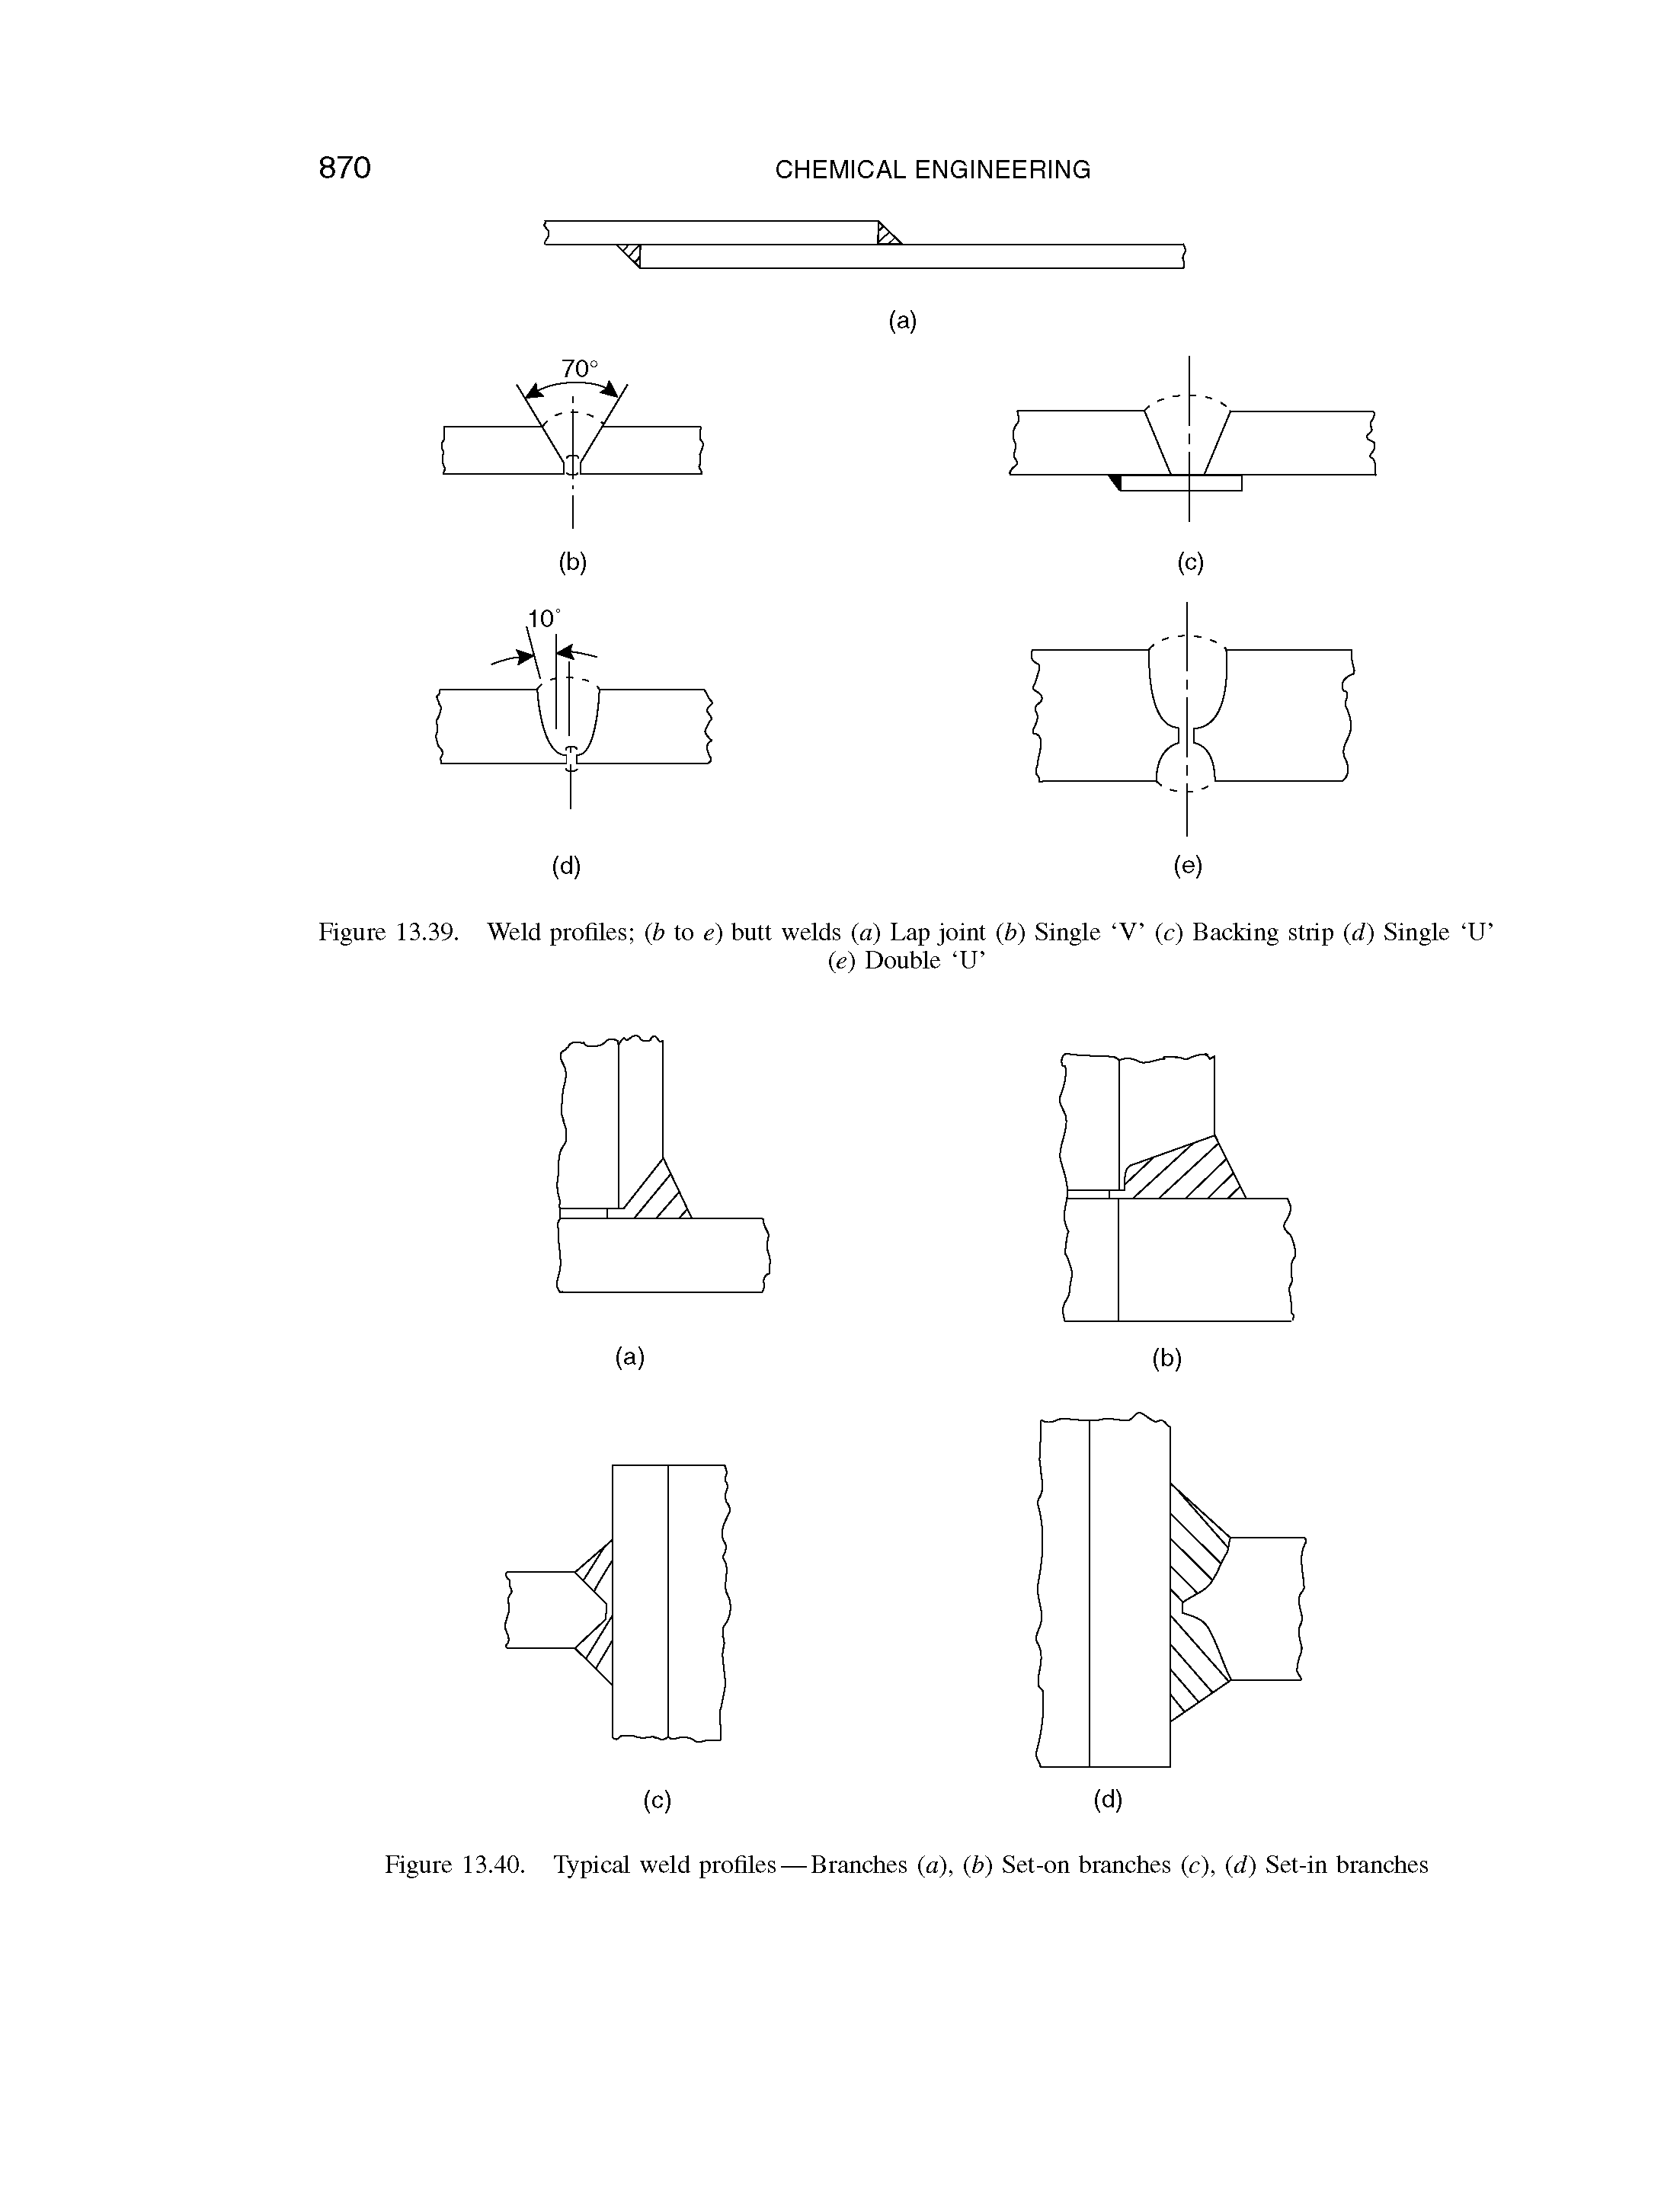 Figure 13.39. Weld profiles (b to e) butt welds (a) Lap joint (b) Single V (c) Backing strip (d) Single U ...